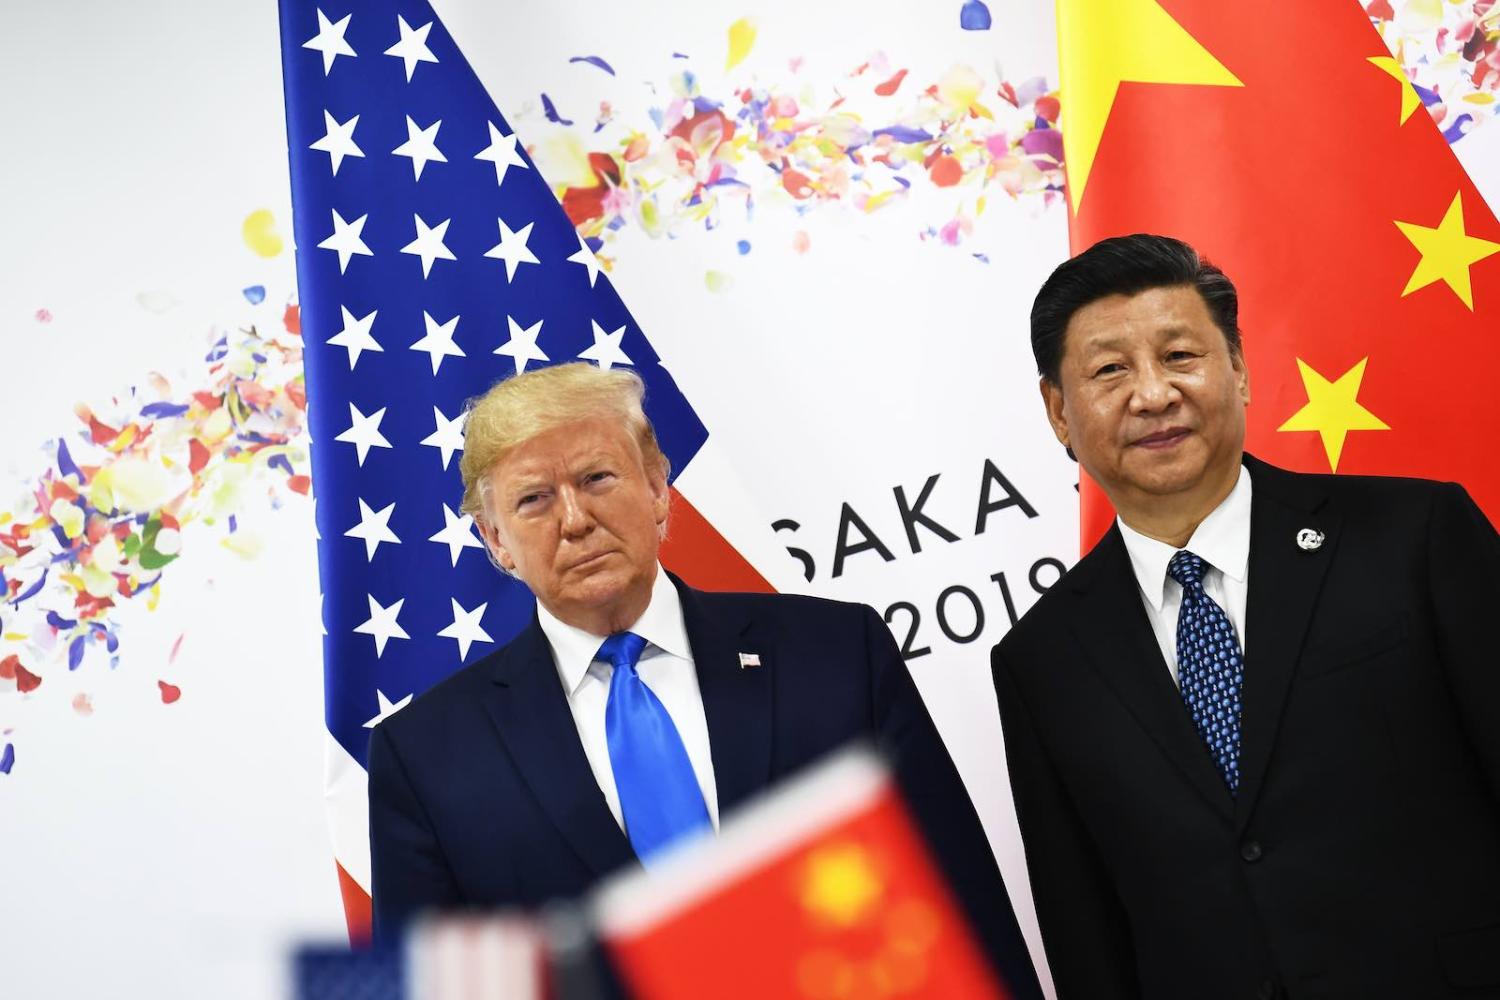 Donald Trump and Xi Jinping during talks at the Osaka G20 in Japan (Photo: Brendan Smialowski via Getty)